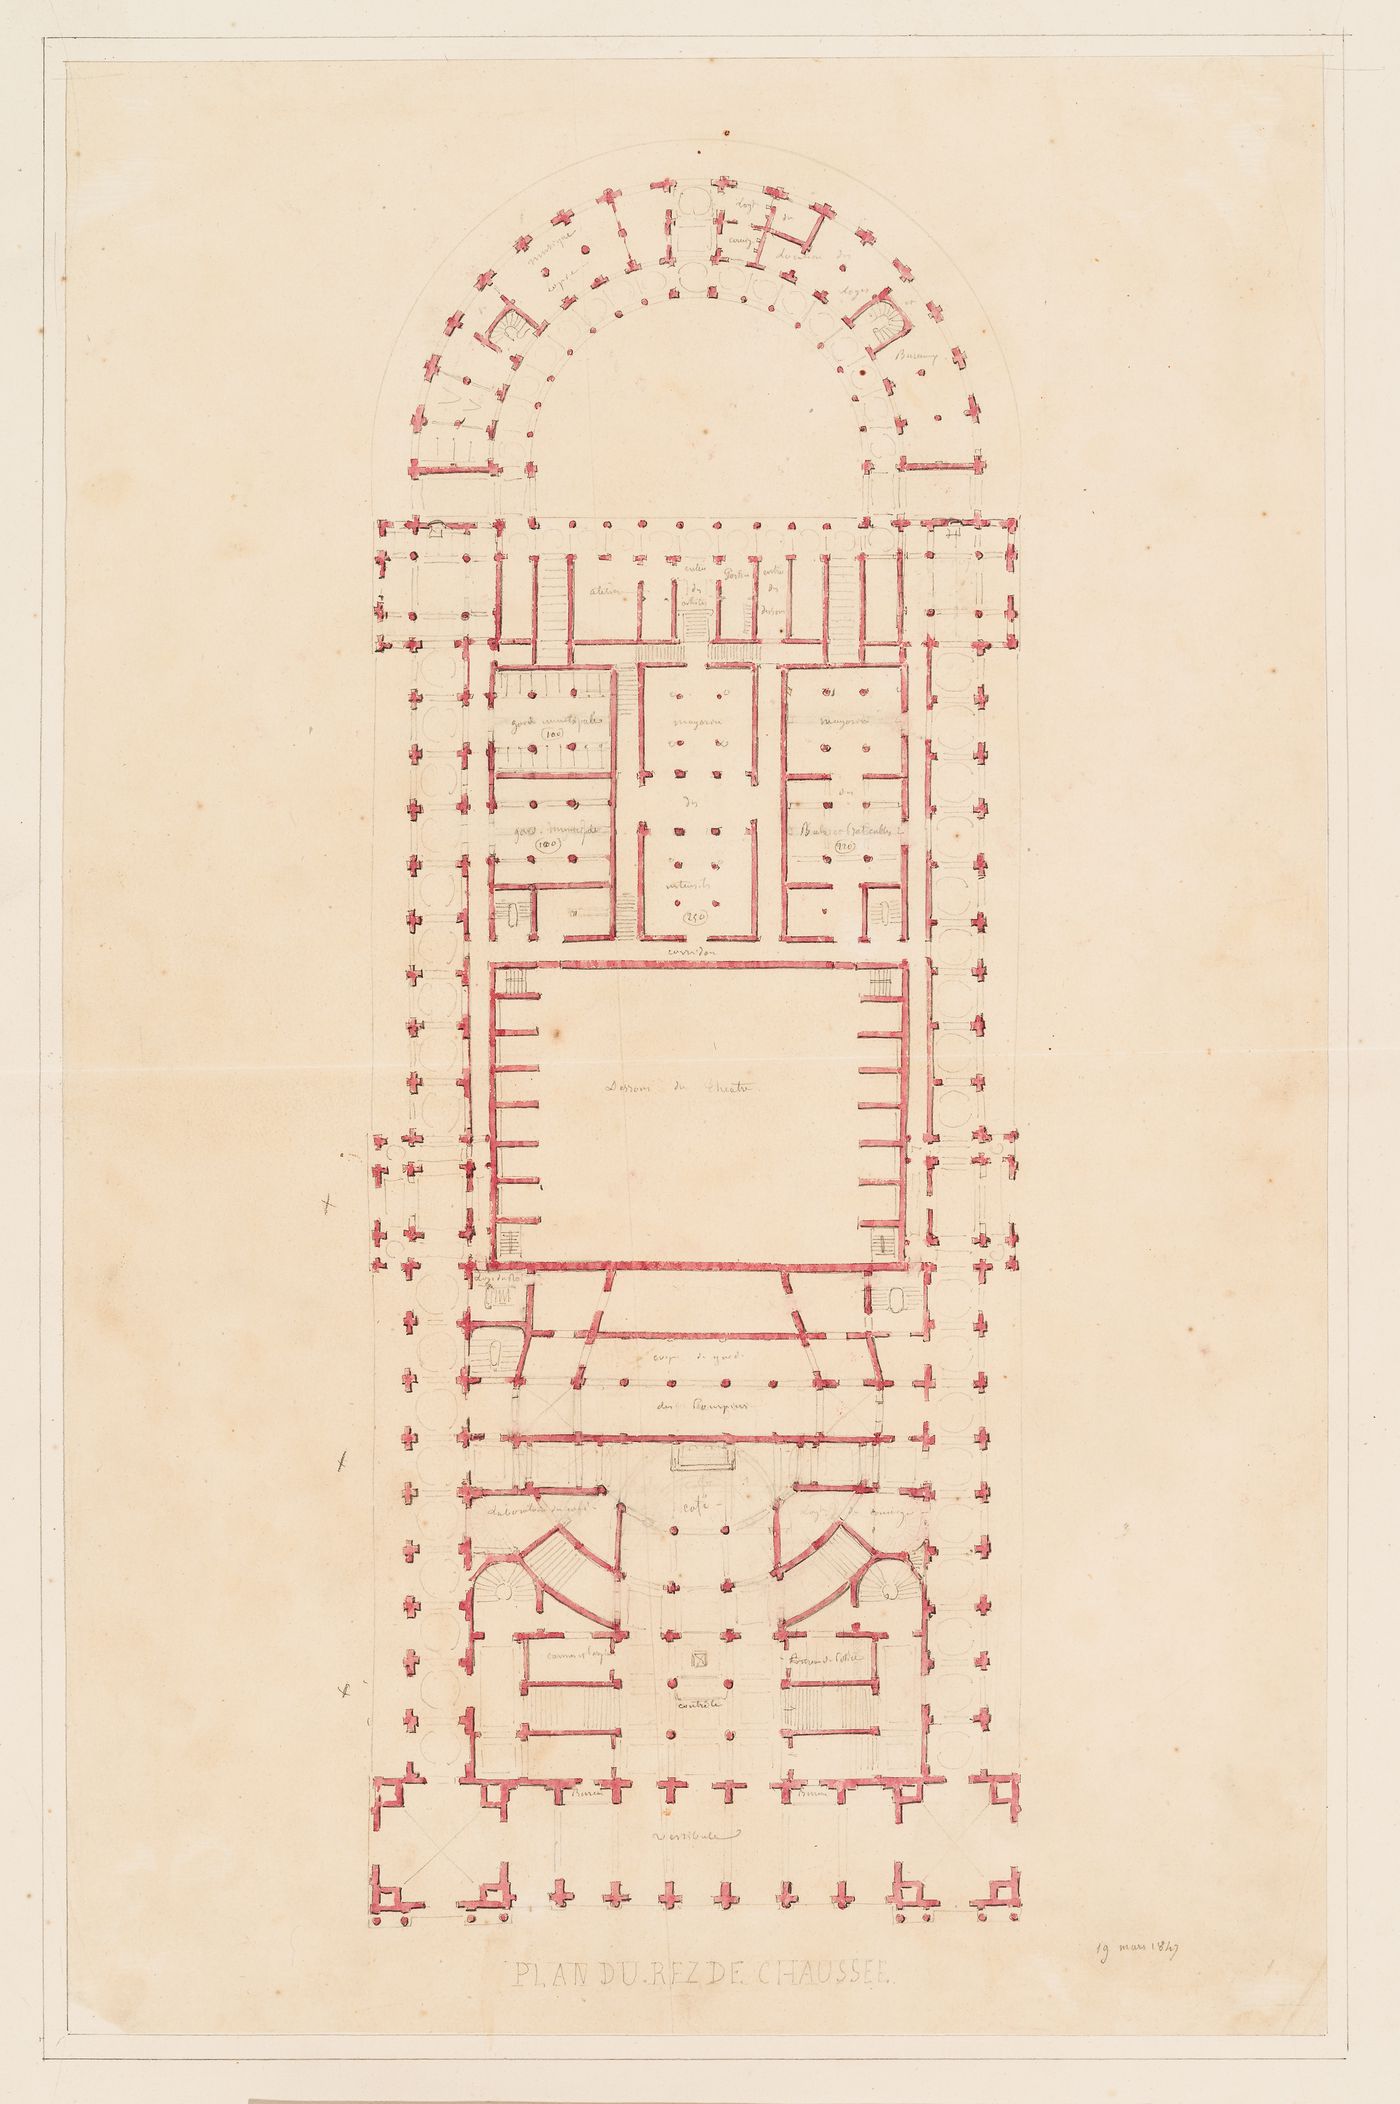 Ground floor plan for an opera house for the Académie royale de musique